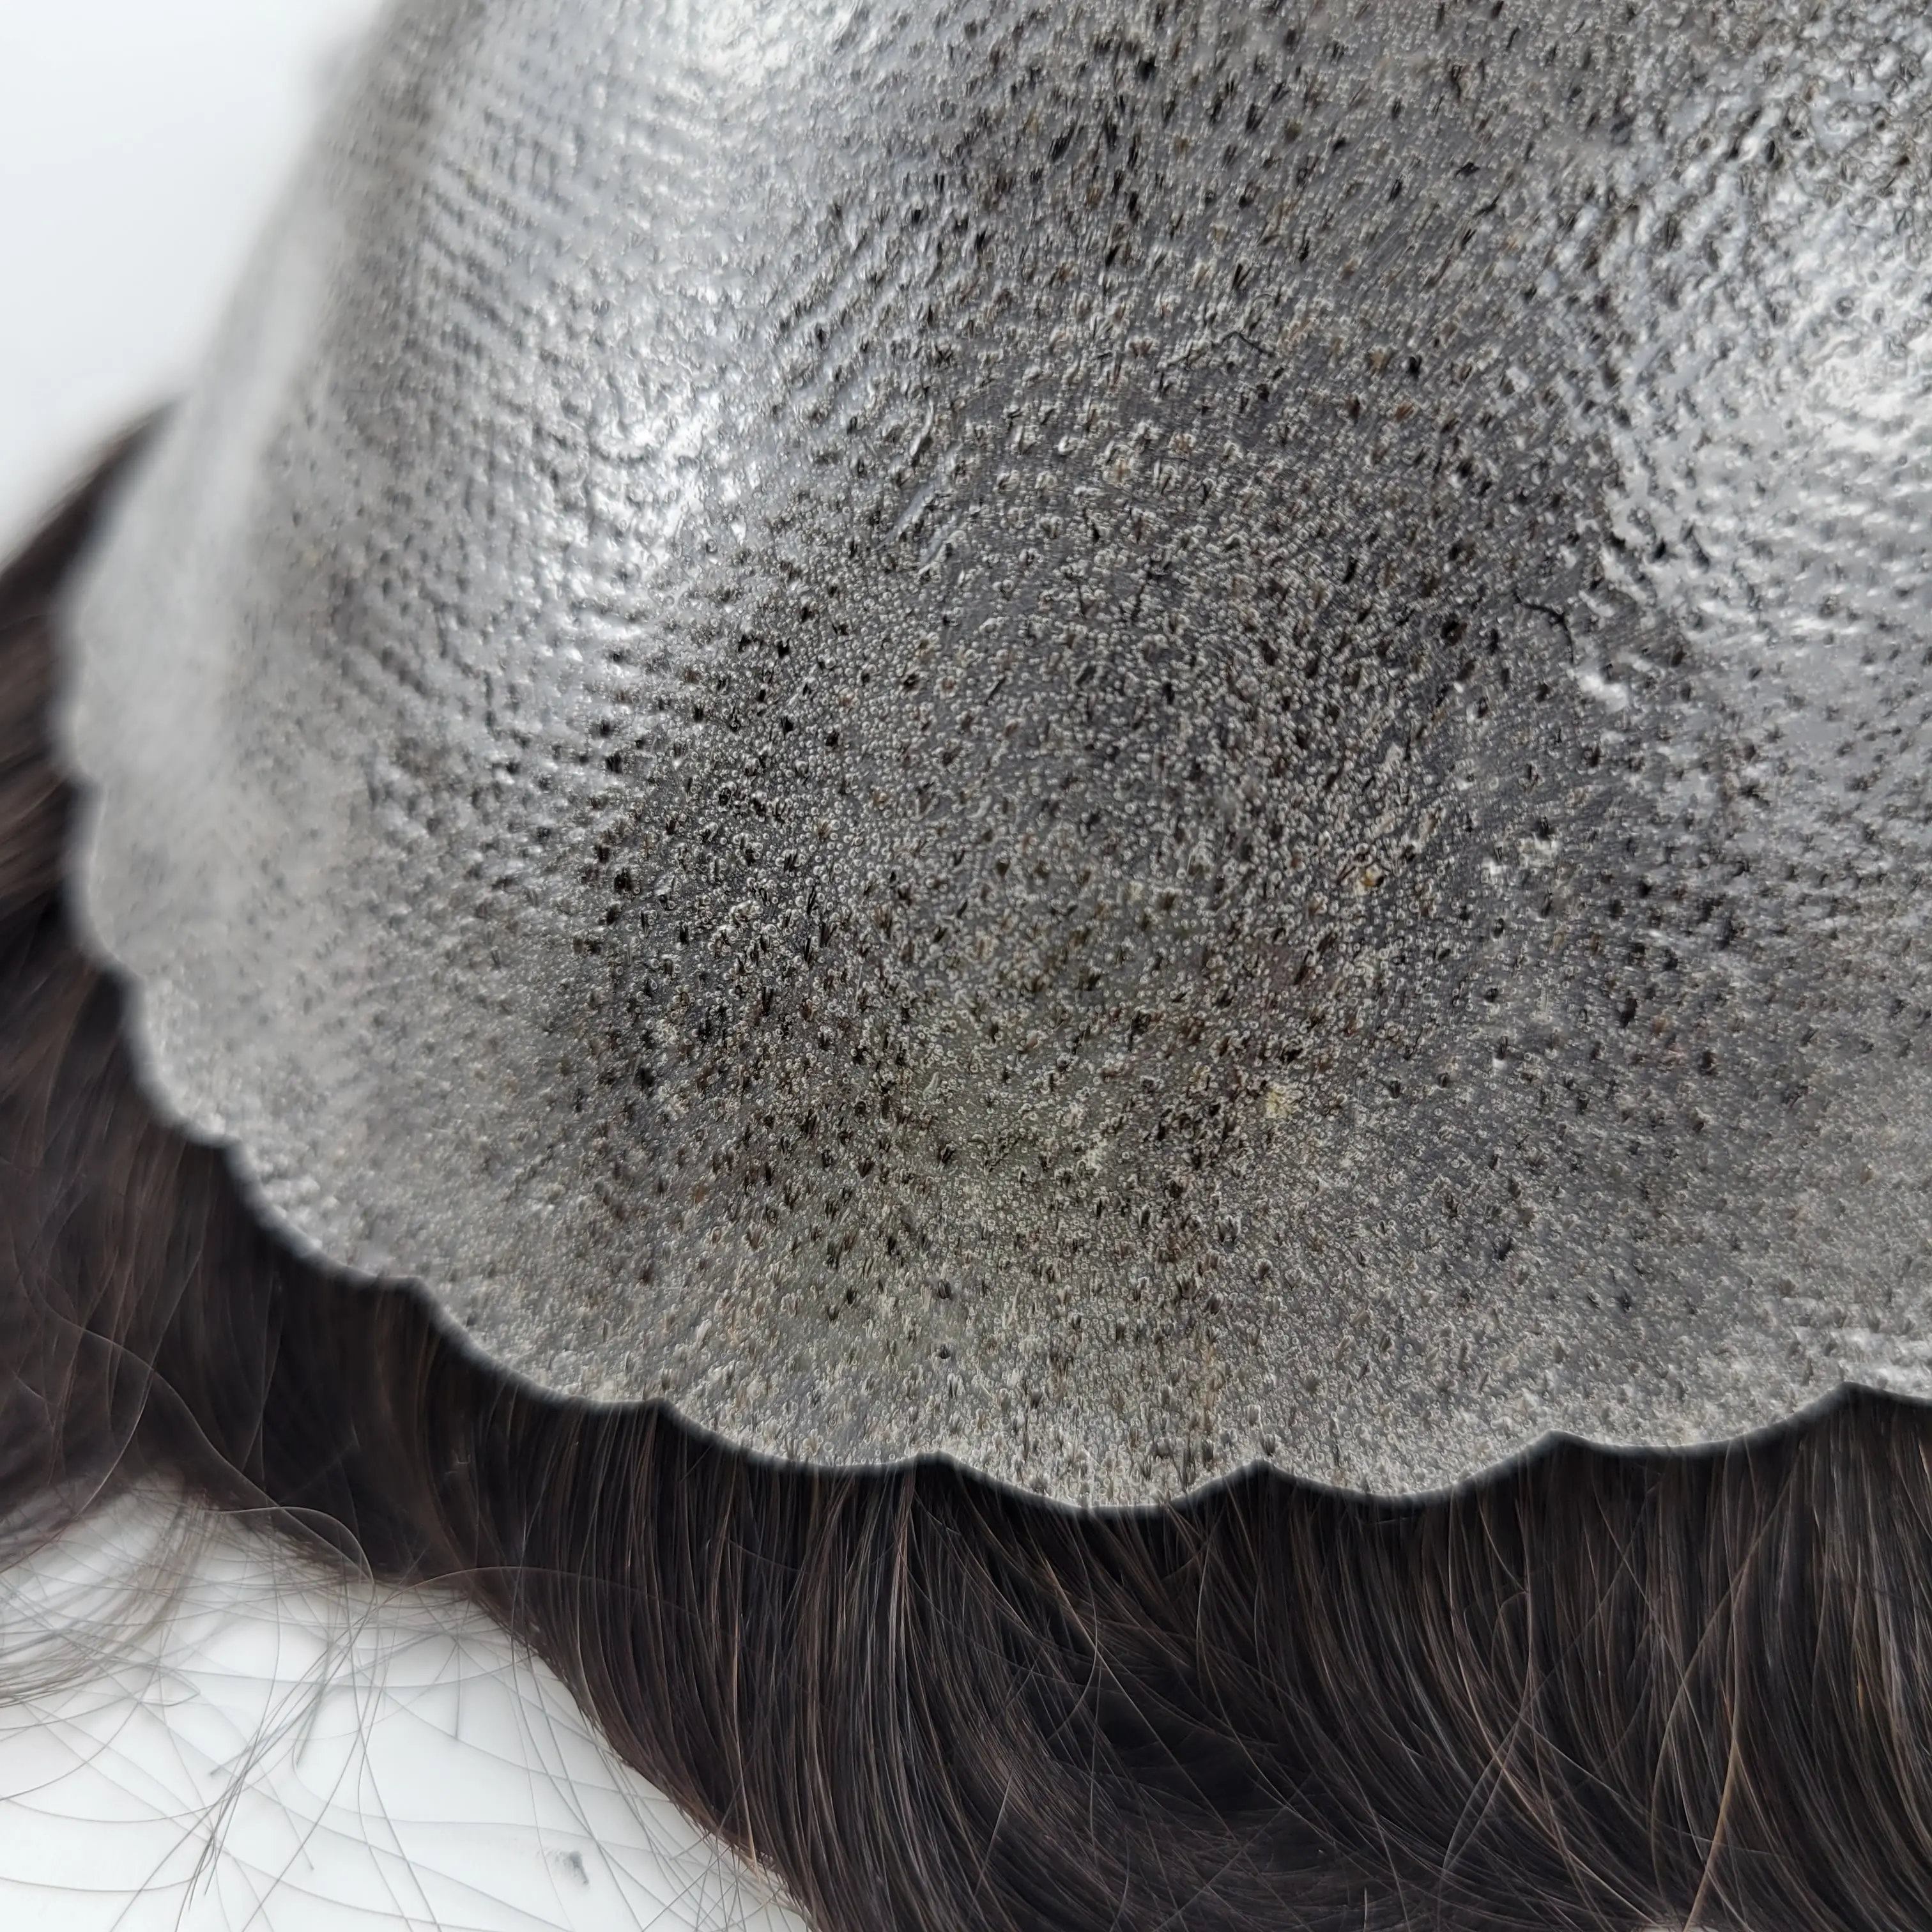 Parrucche sostitutive in pelle da uomo 0.12mm di spessore durevole iniezione parrucche per uomo 100% capelli umani sistema di protesi capillare